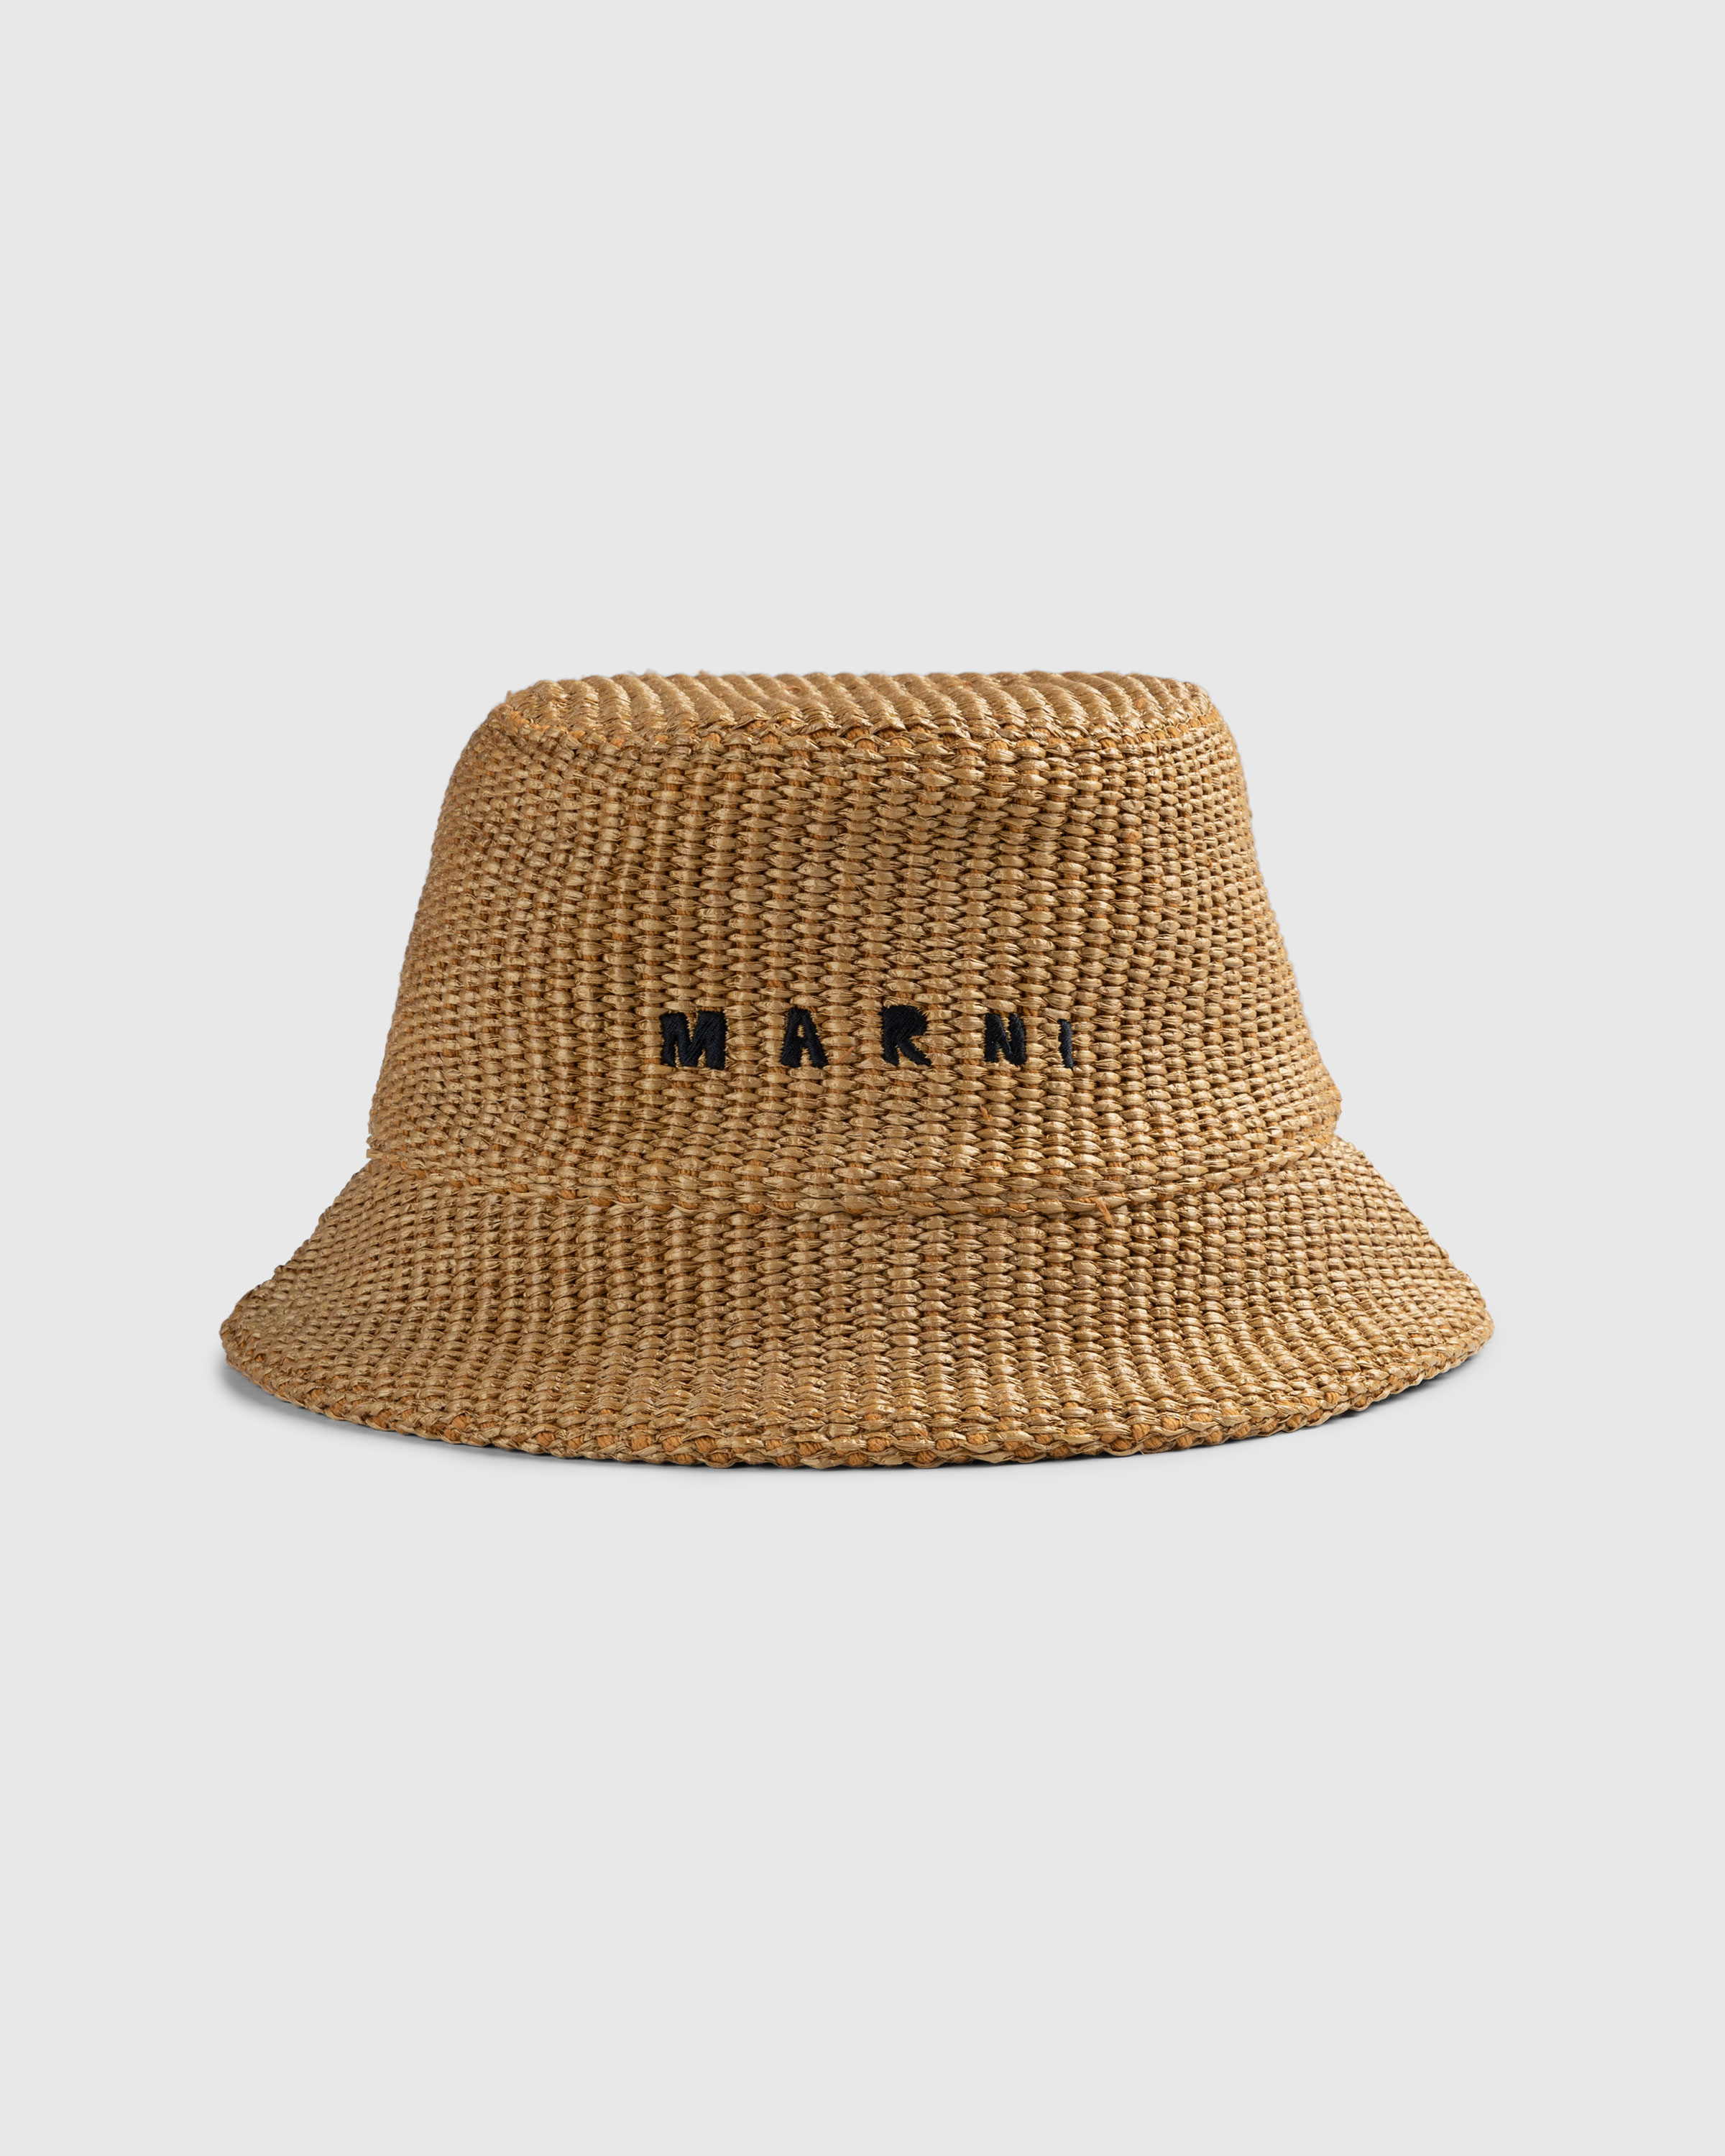 Marni - Raffia Bucket Hat Caramel - Accessories - Brown - Image 1